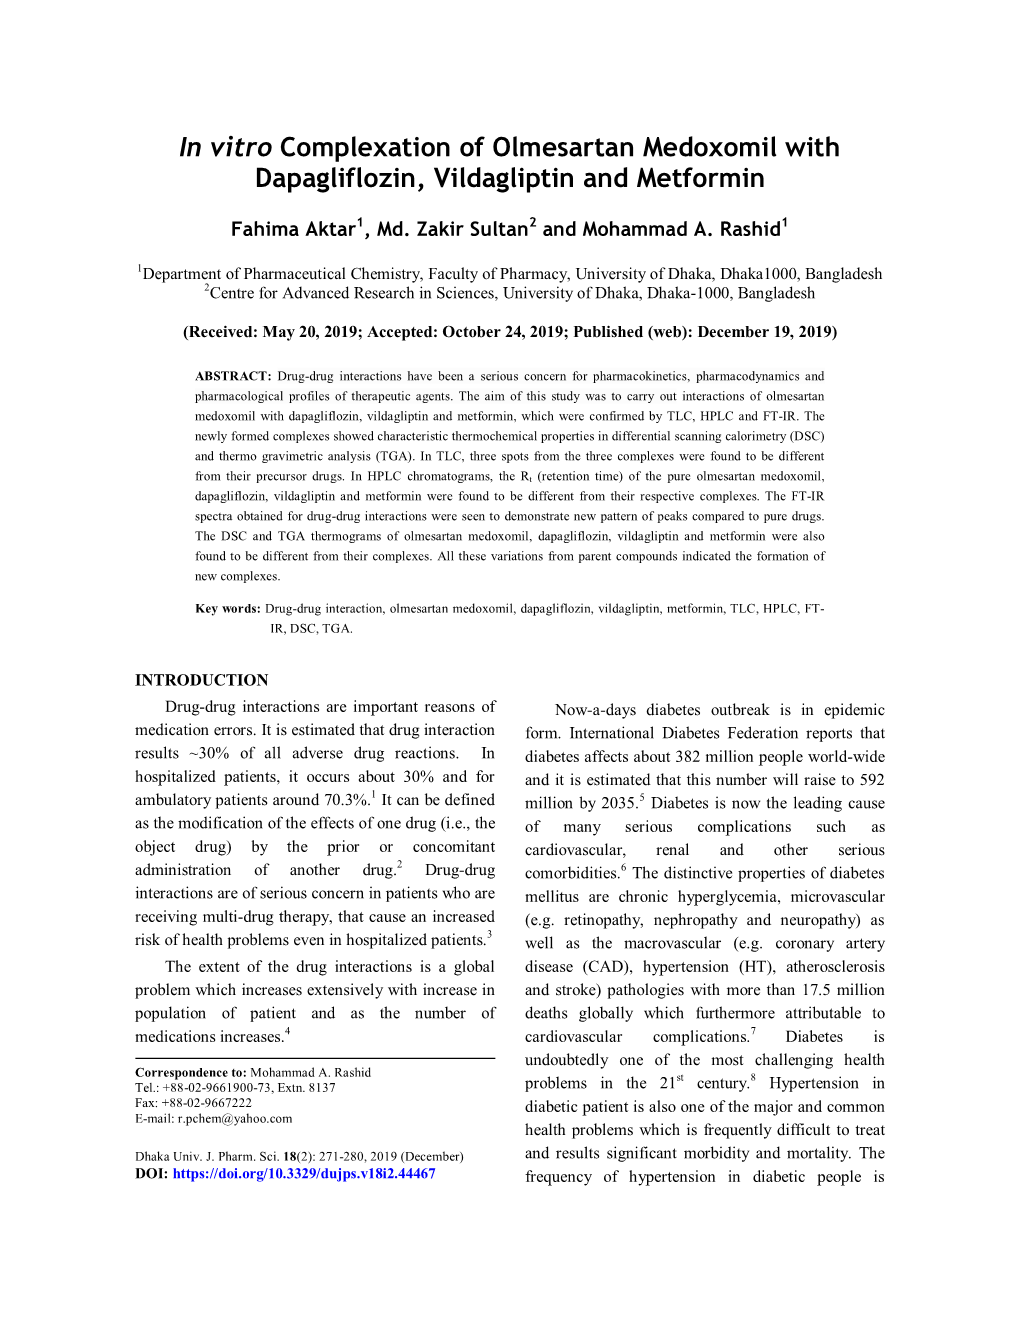 In Vitro Complexation of Olmesartan Medoxomil with Dapagliflozin, Vildagliptin and Metformin